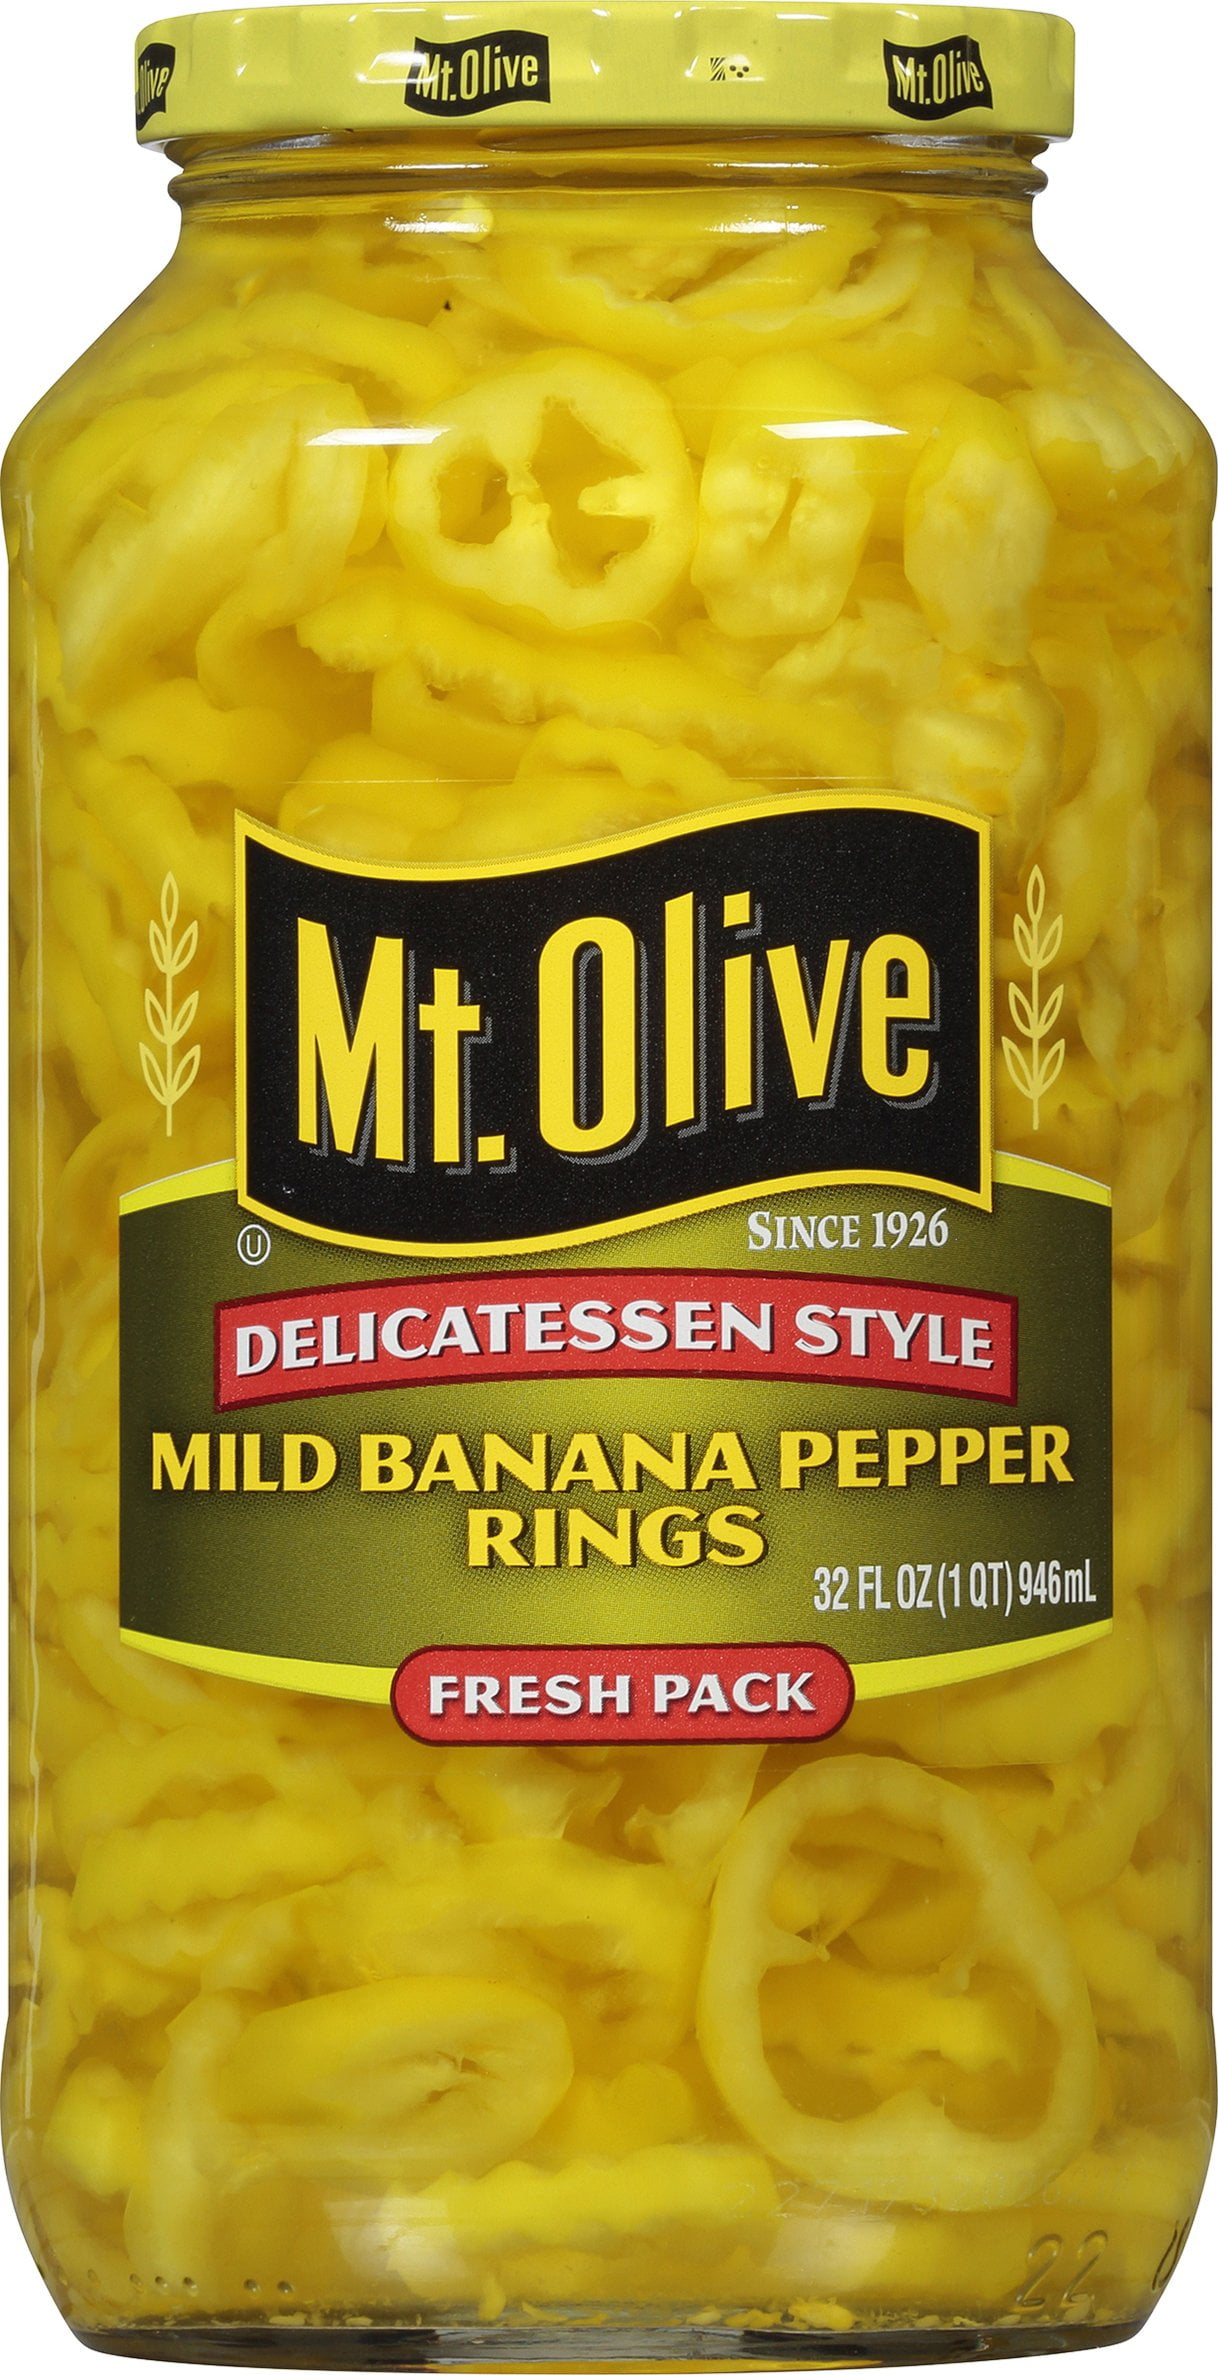 Mt. Olive Delicatessen Style Mild Banana Pepper Rings, 32 fl oz Jar